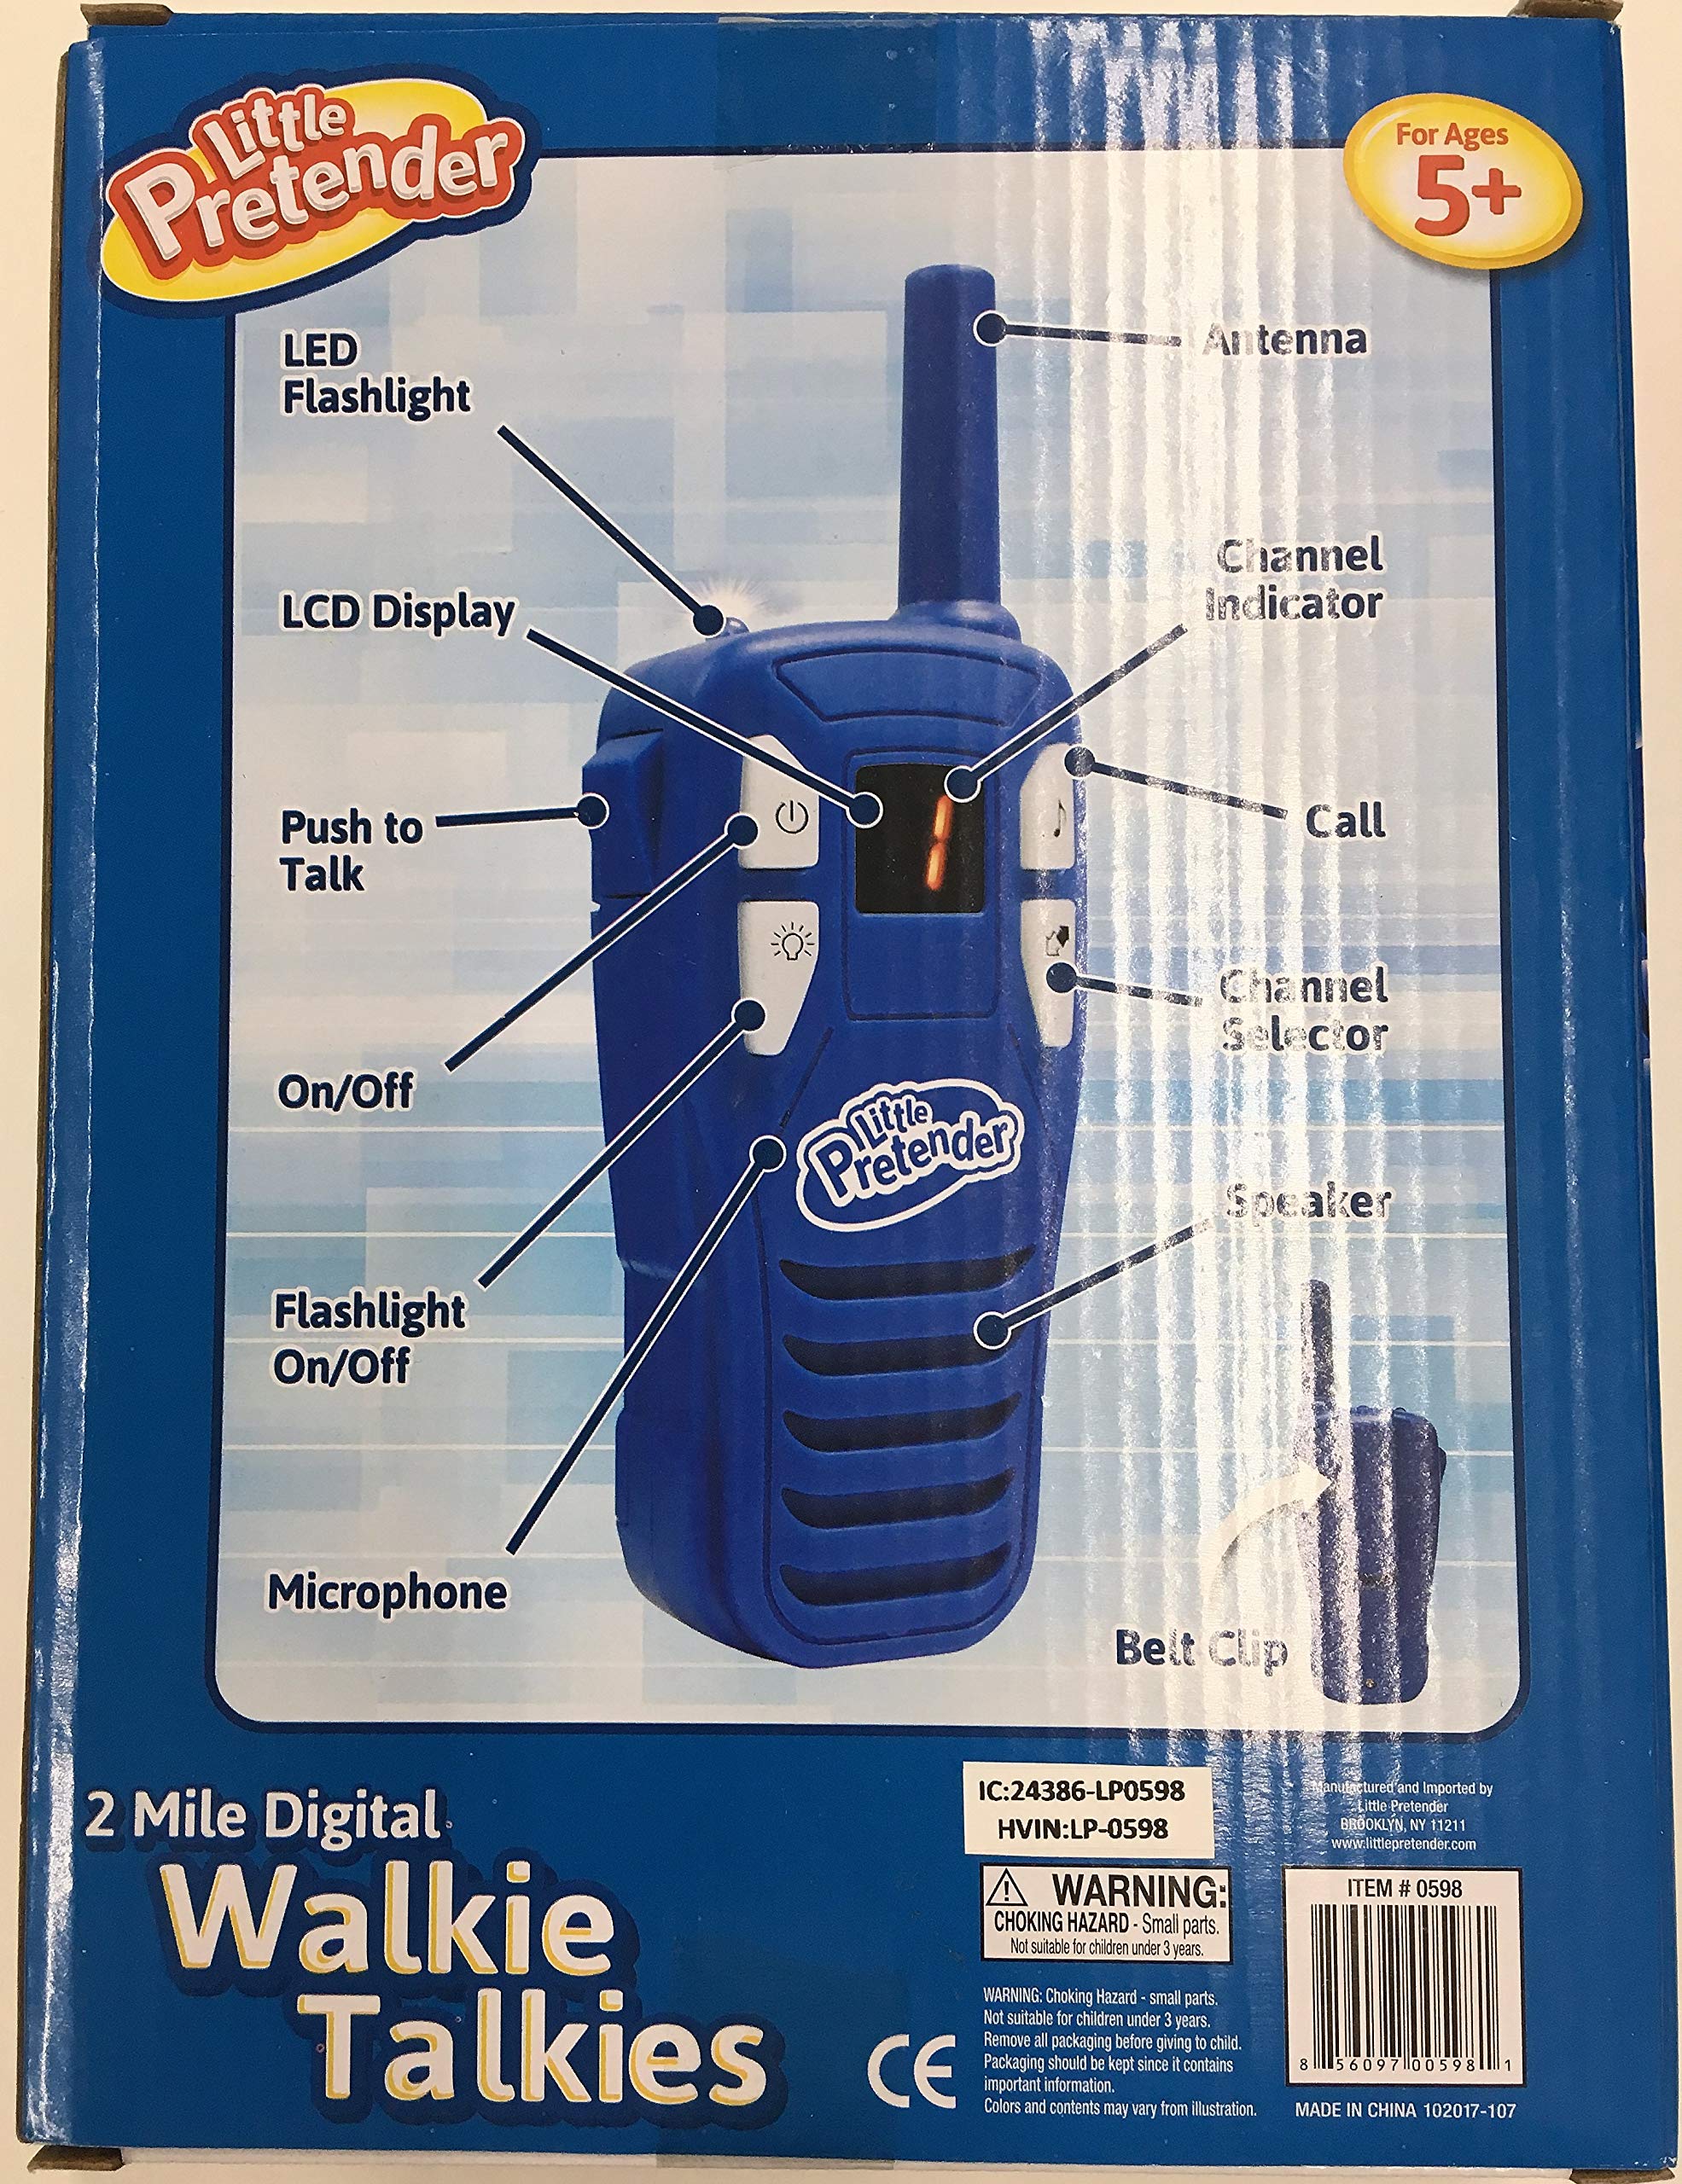 Little Pretender - 2 Pack Walkie Talkies for Kids, 2 Mile Range, 3 Channels, Includes Built in Flash Light | Kids Walkie Talkies | 2 Pack Walkie Talkie Kids, Girls, Boys